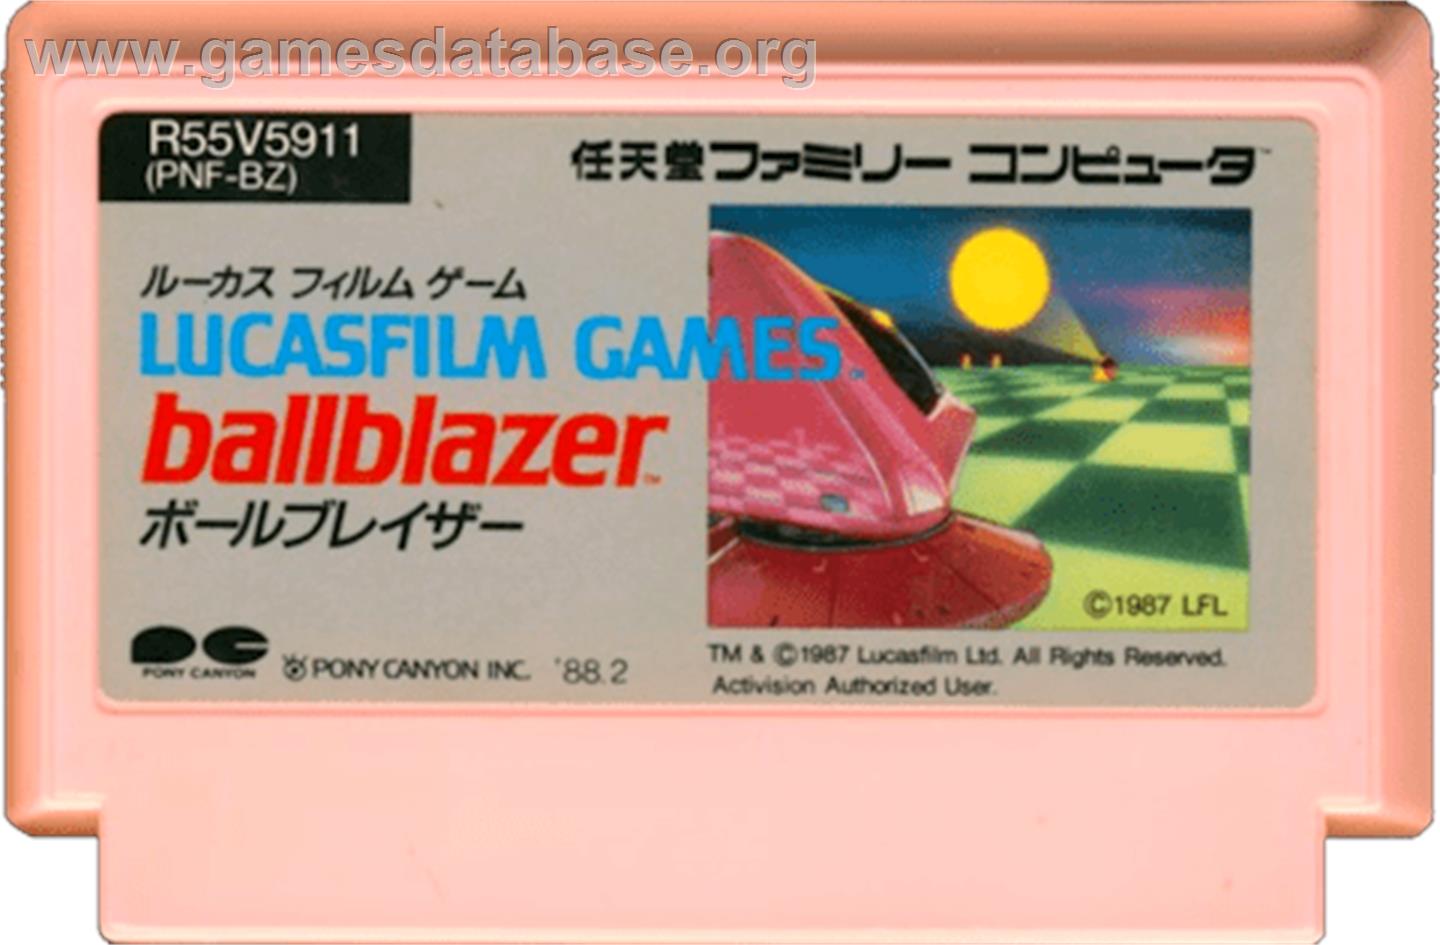 Ballblazer - Nintendo NES - Artwork - Cartridge